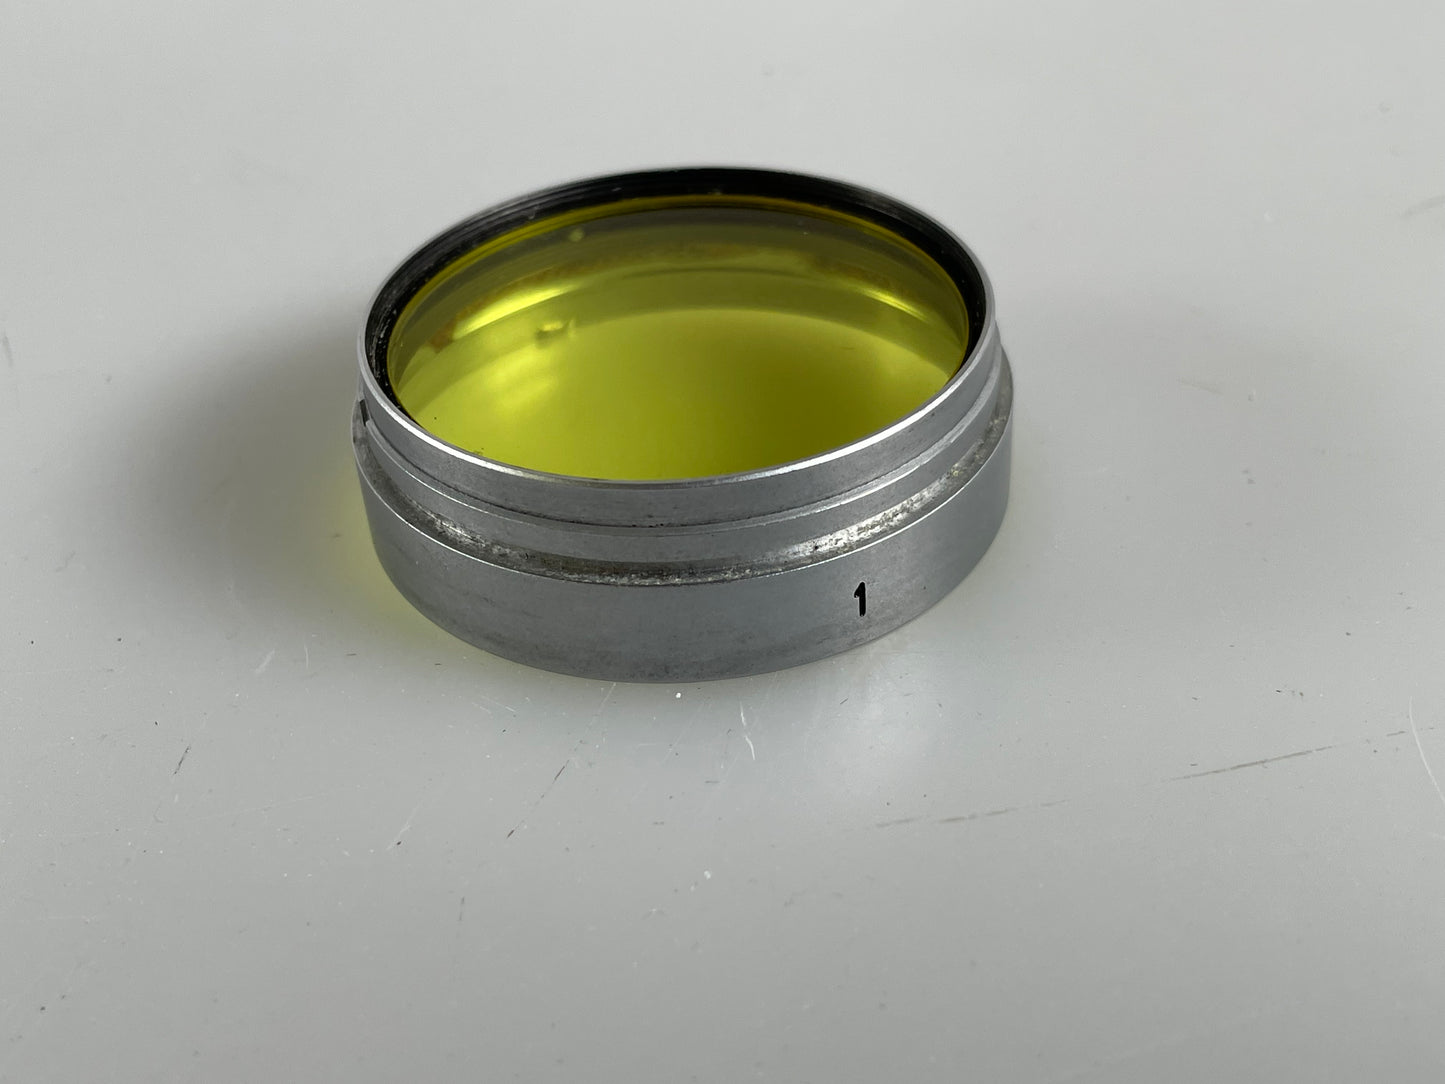 Leica Push On 1 Yellow Chrome Lens Filter for Summarit